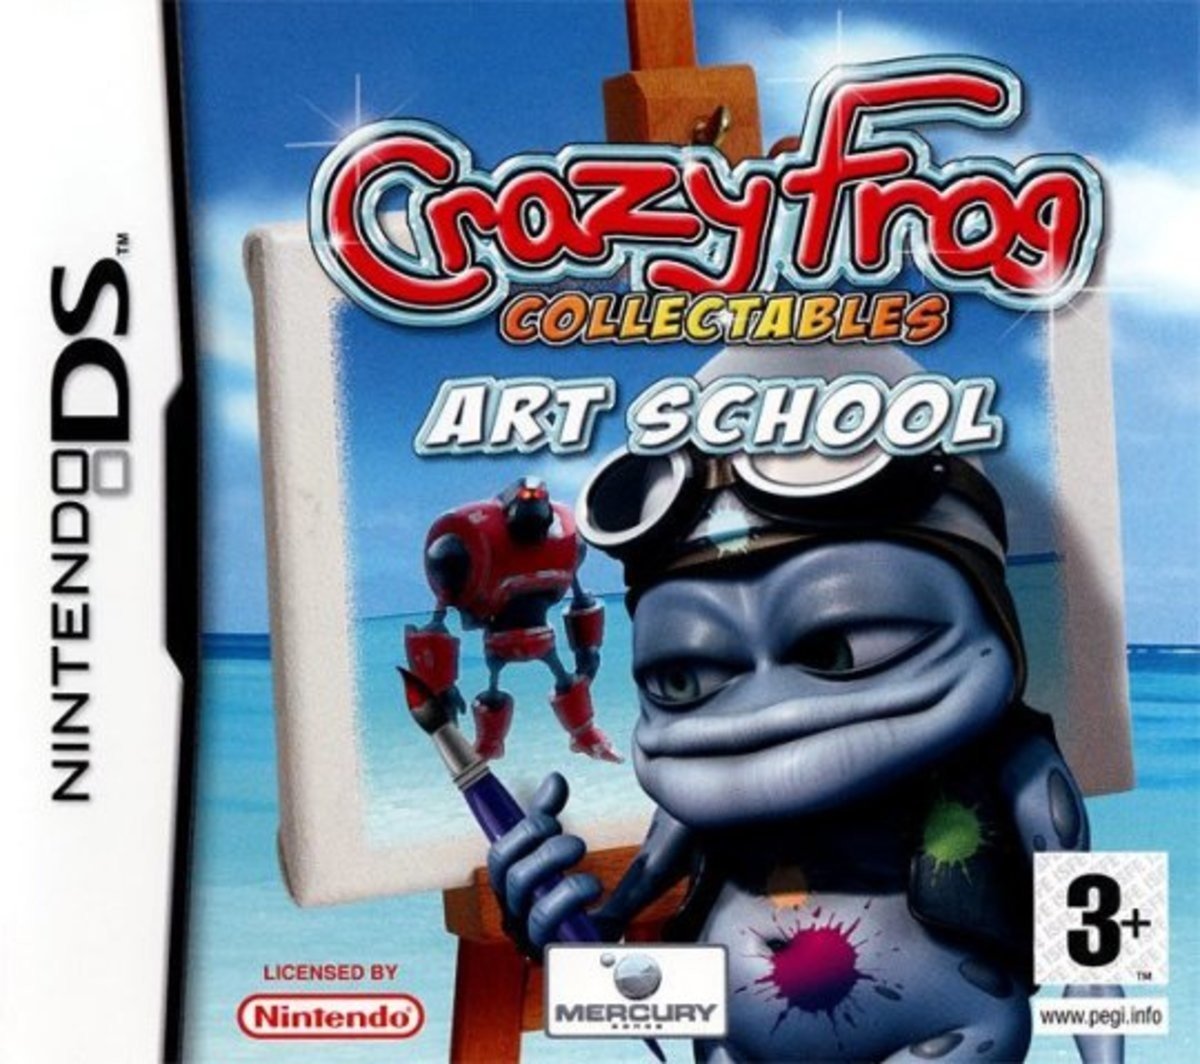 Crazy Frog Nintendo DS